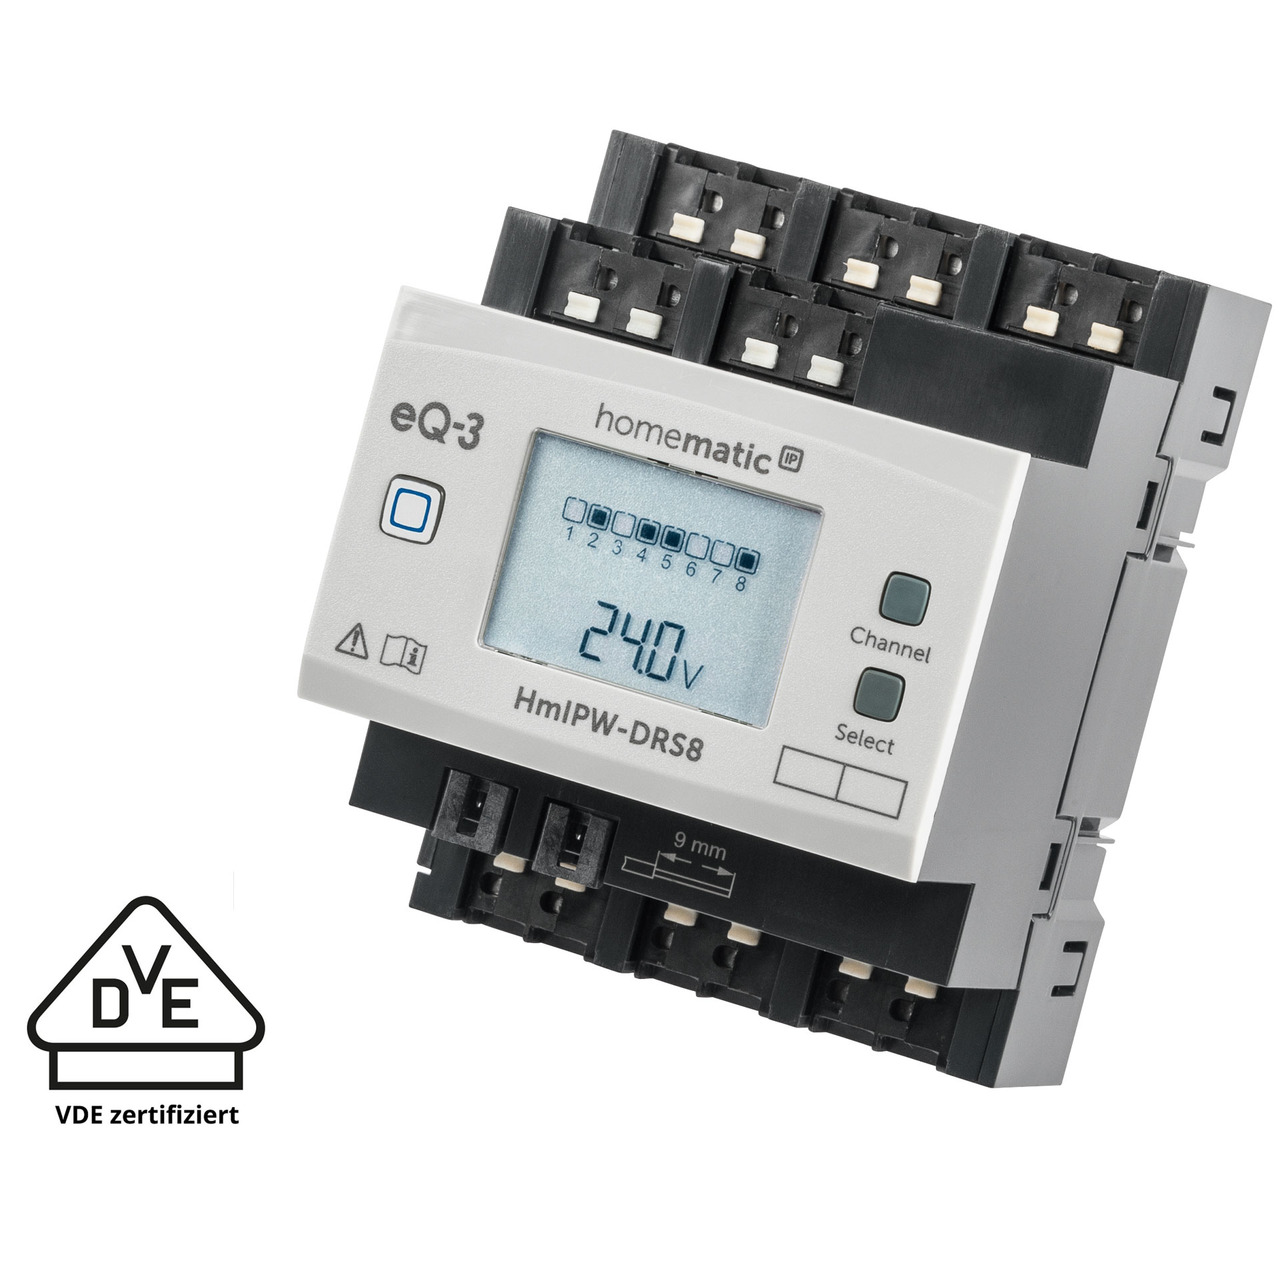 Homematic IP Wired Smart Home 8-fach-Schaltaktor HmIPW-DRS8- VDE zertifiziert unter Hausautomation